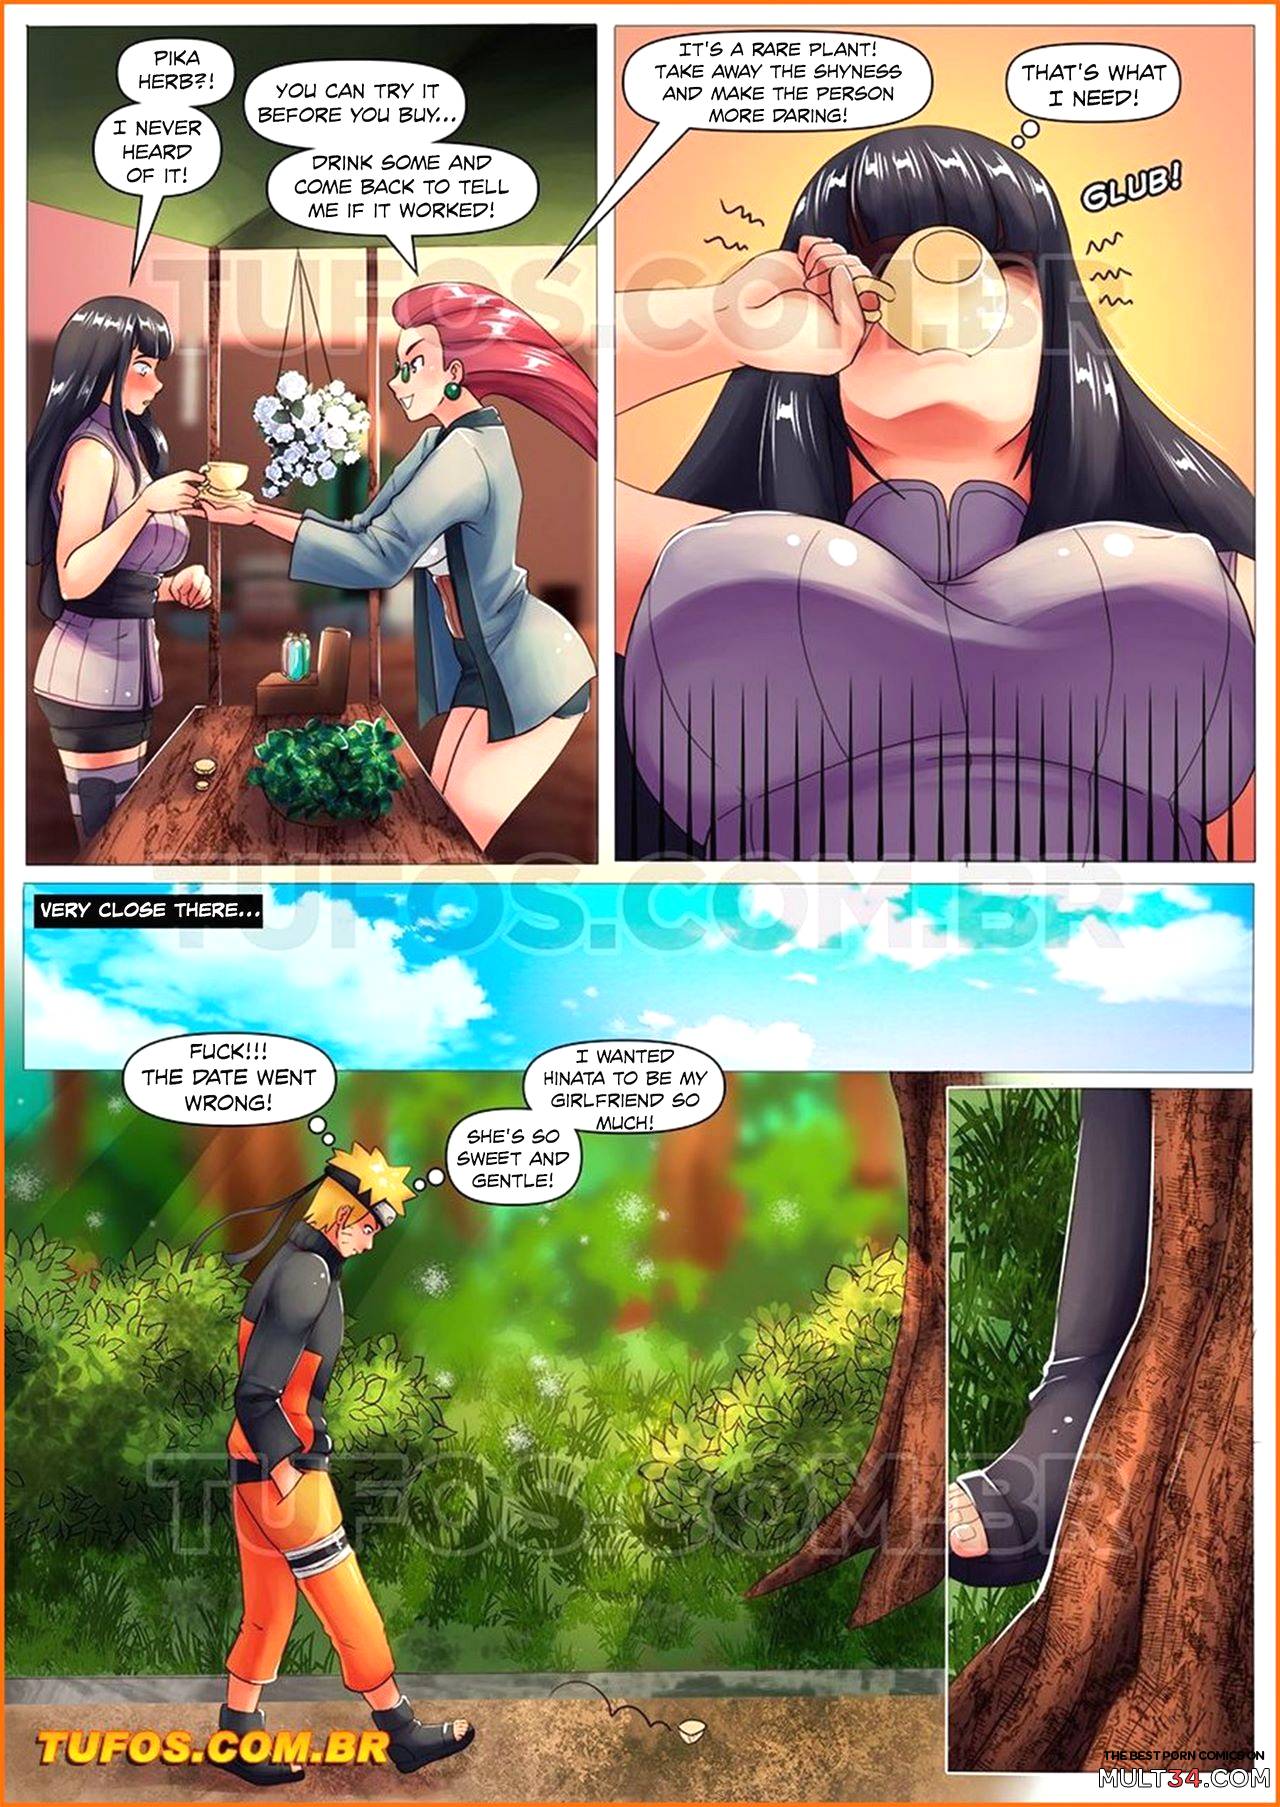 Narutoon 4 - The Powerful Pika Tea page 4